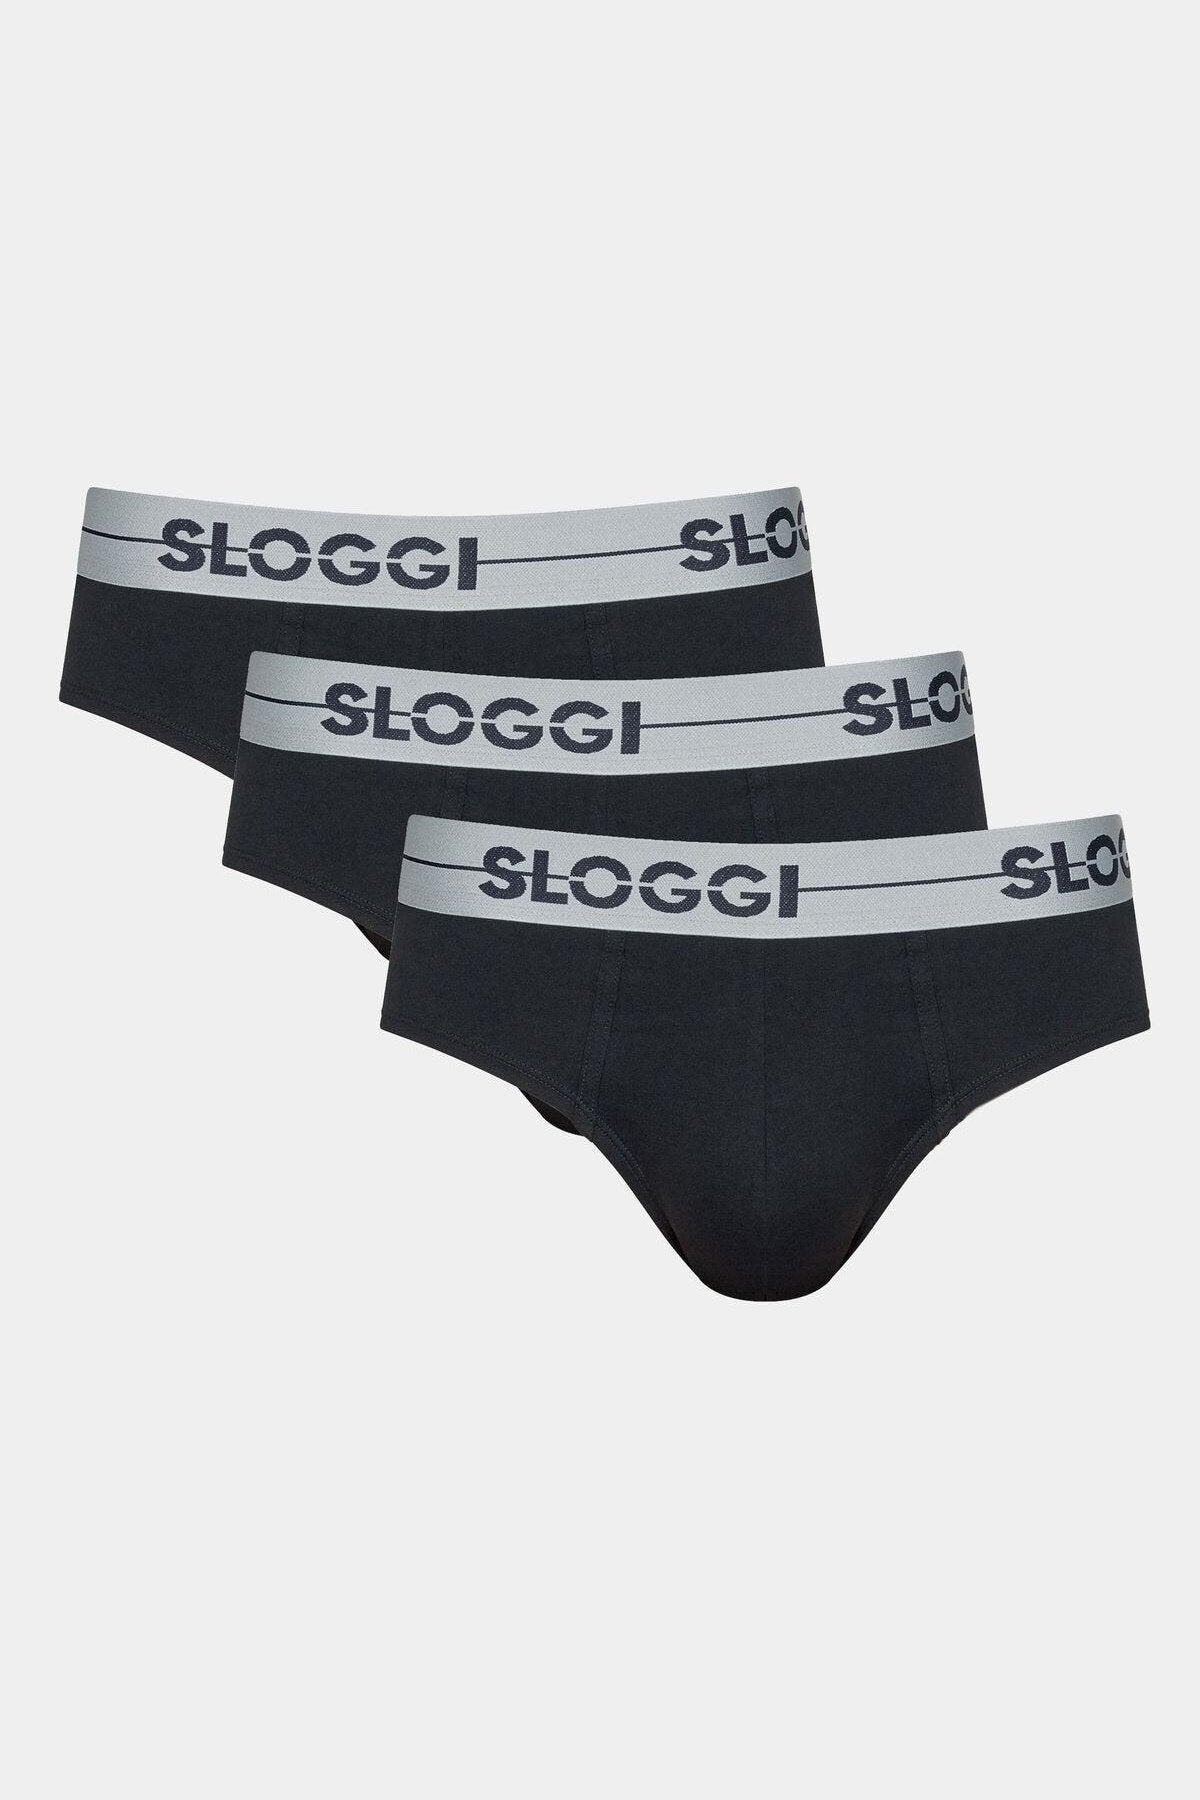 SLOGGI - מארז 3 תחתונים GO MINI שחורים - MASHBIR//365